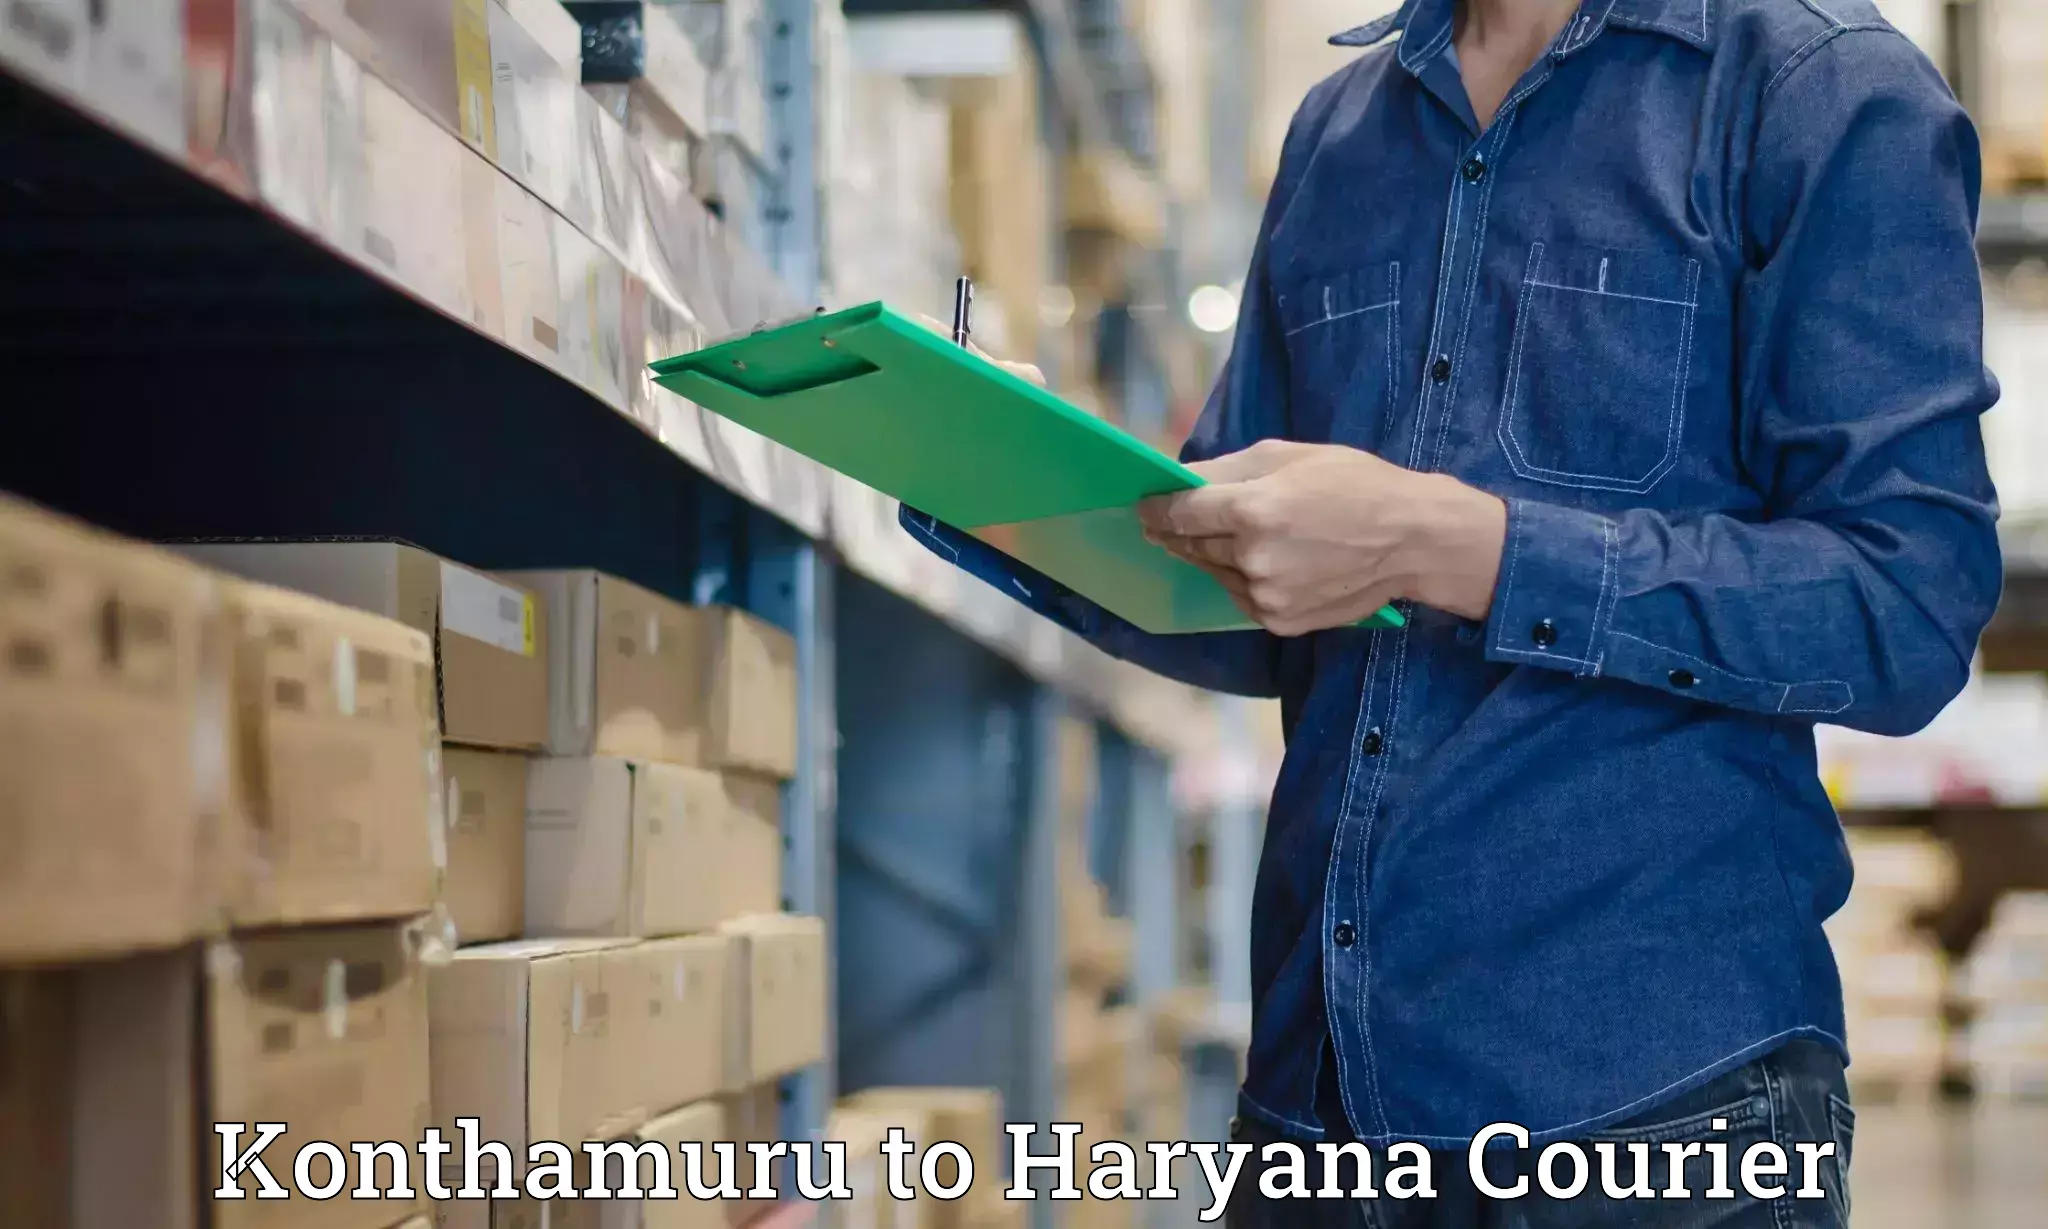 Multi-national courier services Konthamuru to Haryana